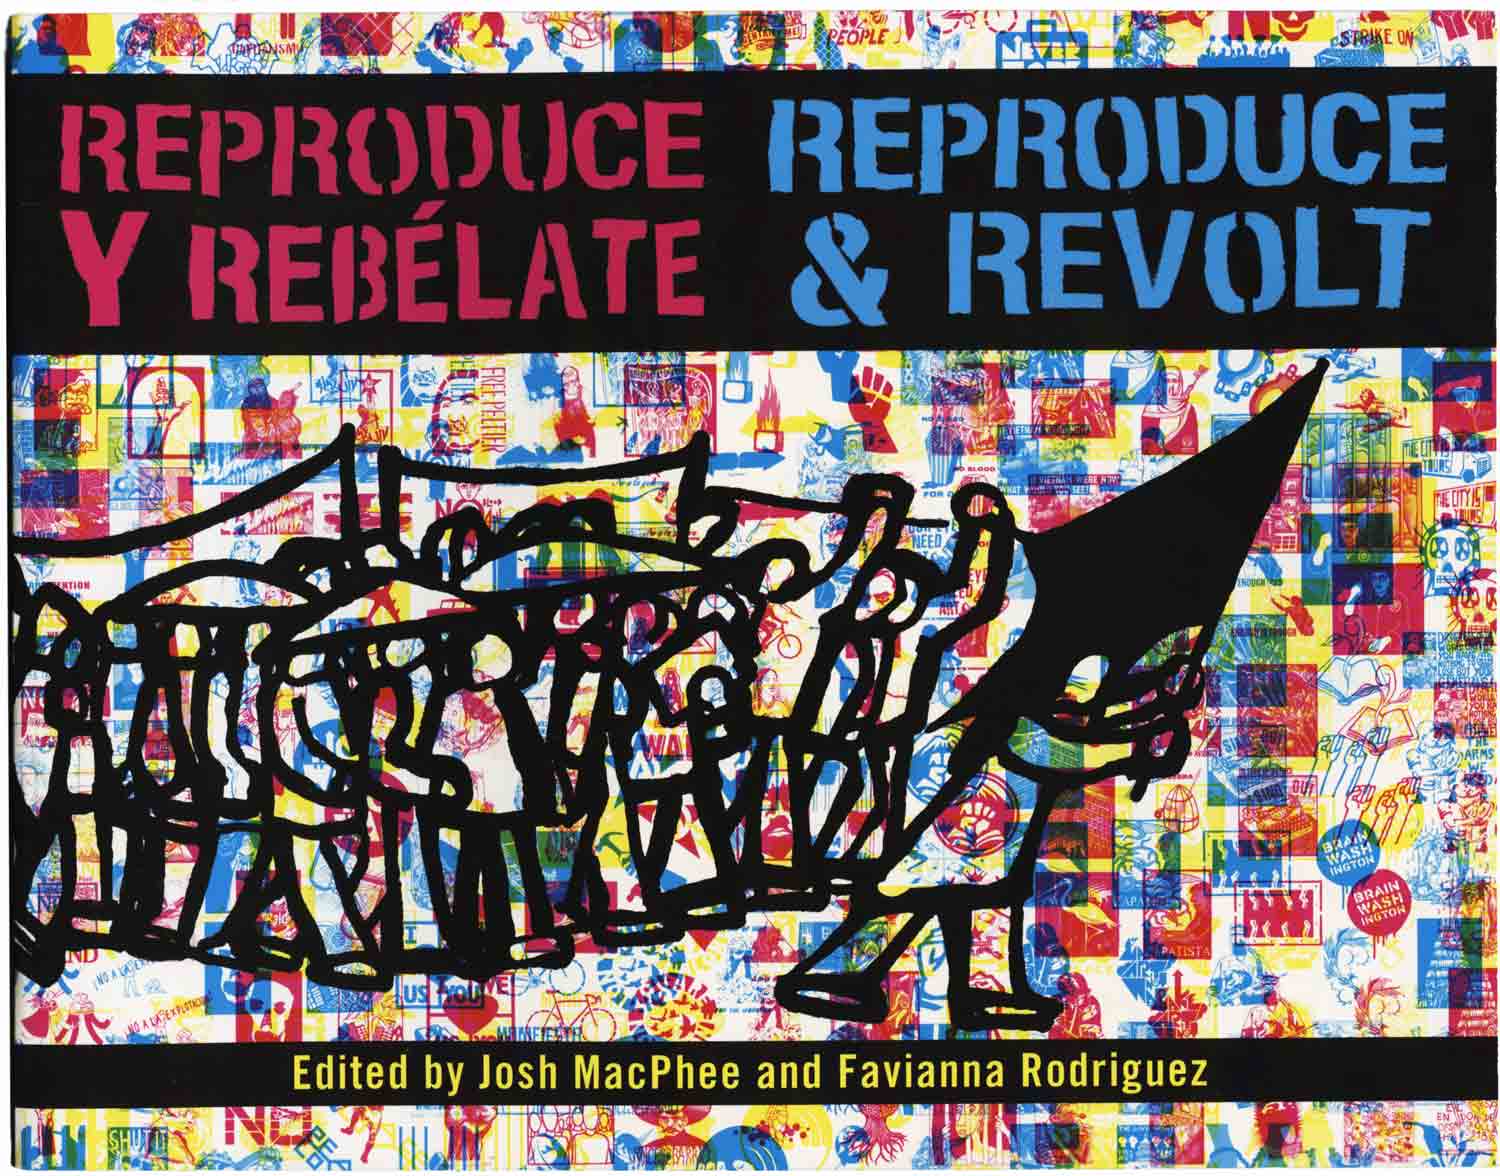 Reproduce & Revolt / Reproduce Y Rebélate